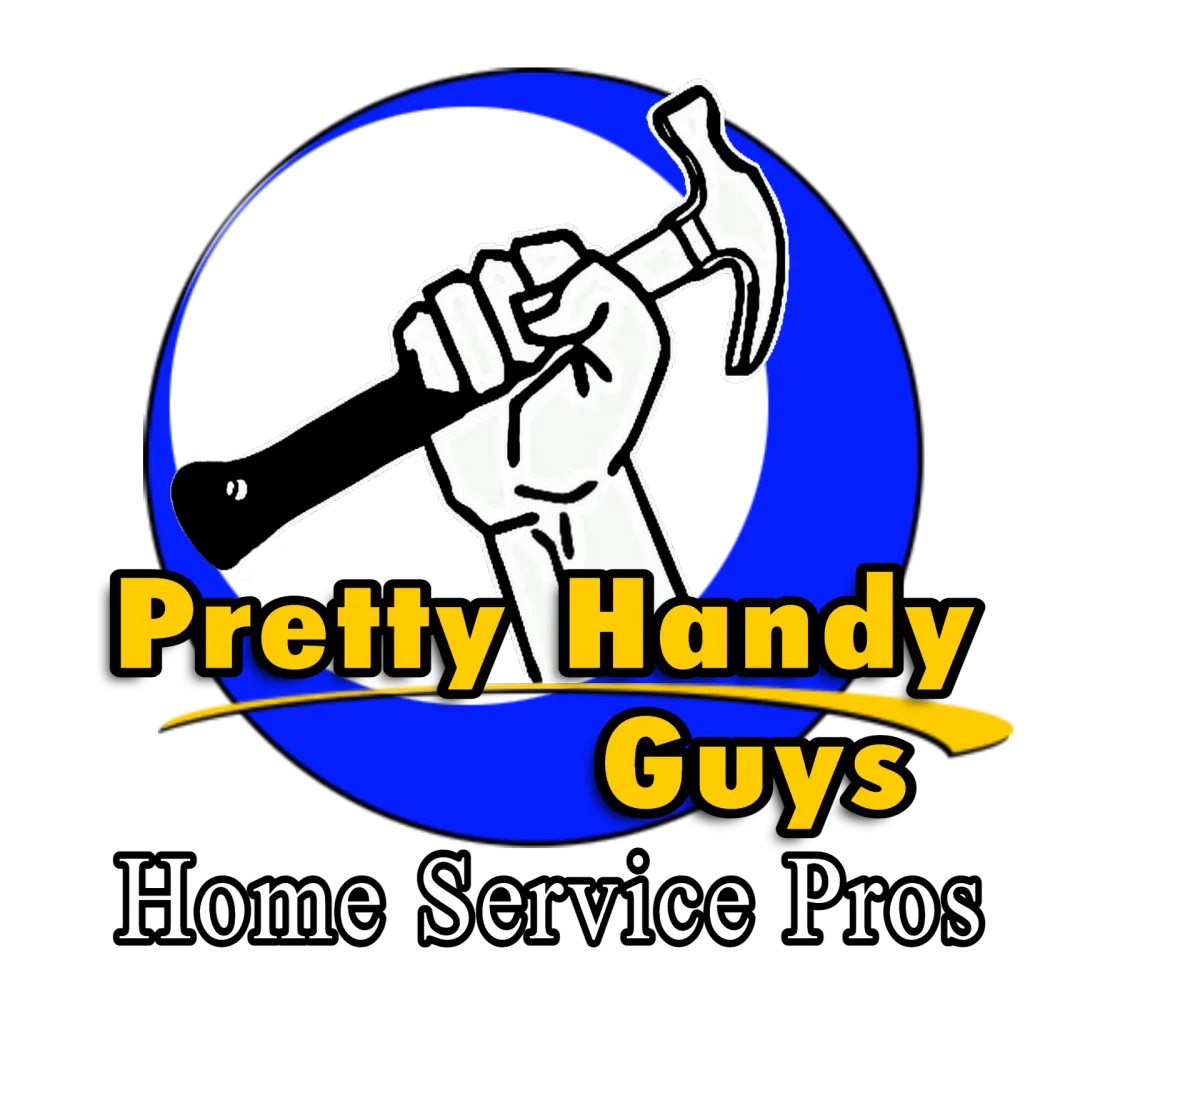 Pretty Handy Guys Home Service Pros Handyman Services In Wichita Falls